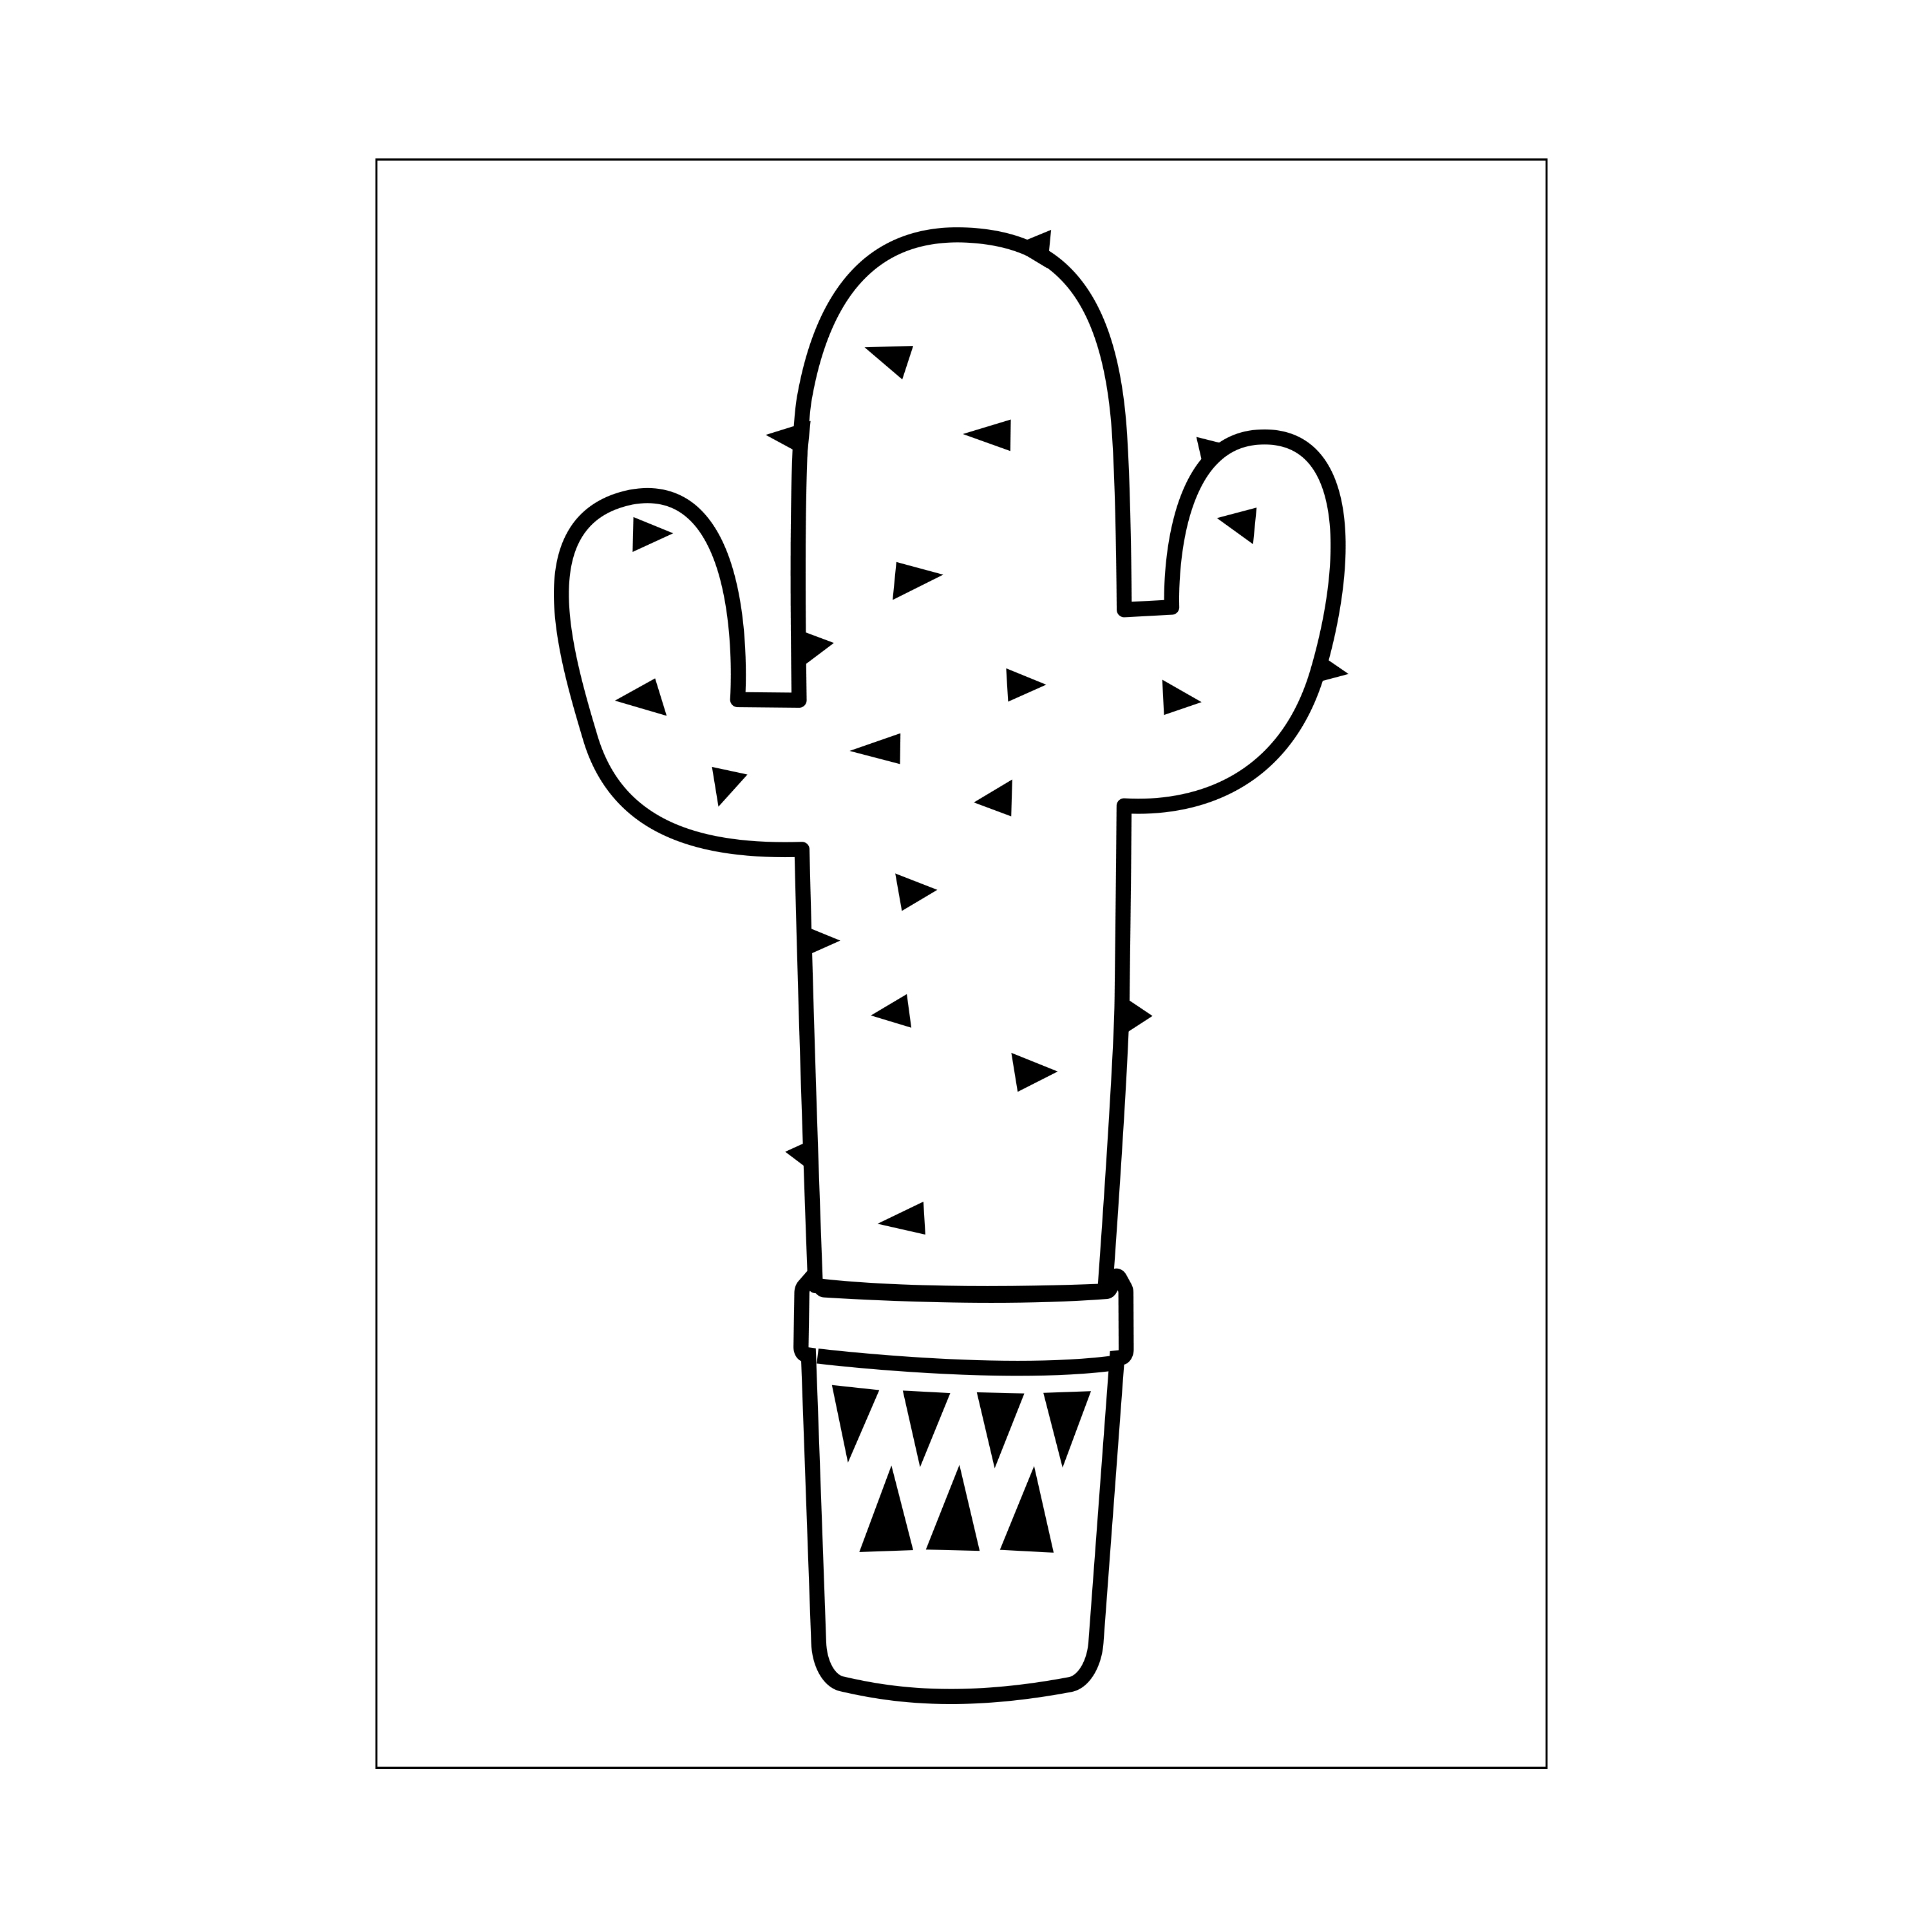 Darice • Embossing sjabloon 3 armen cactus